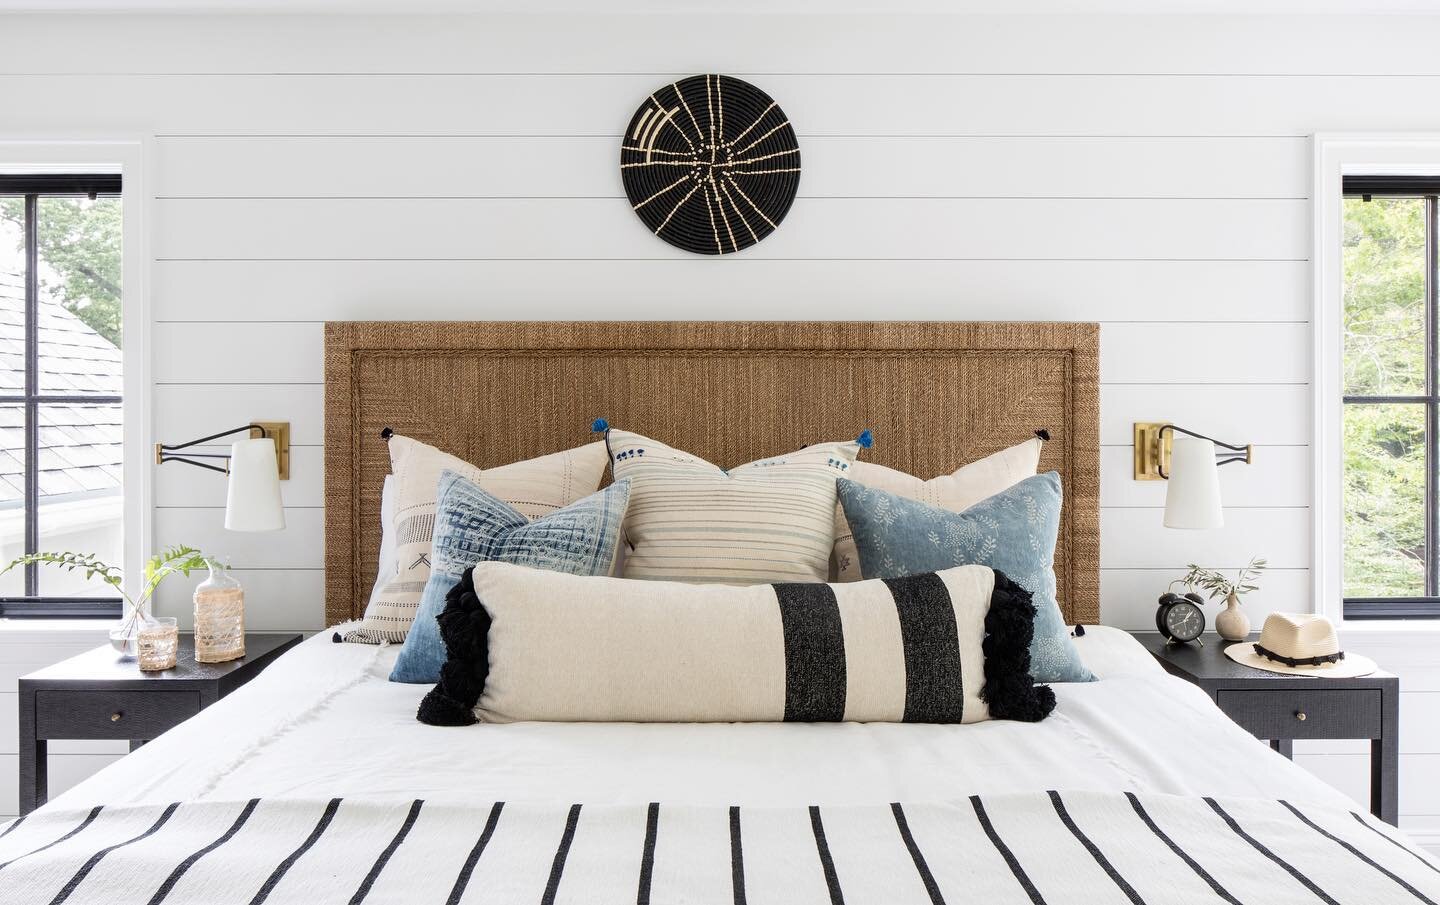 Master bedroom #goals for your Sunday swipe . Interior Design @stephaniekrausdesigns Photography @raquellangworthy.photo #fox builders #rahoffmanarchitects #balconydecor #blacksndwhite #berwynnewbuild .⠀⠀⠀⠀
.⠀⠀⠀⠀
.⠀⠀⠀⠀
.⠀⠀⠀⠀
.⠀⠀⠀⠀
.⠀⠀⠀⠀
#interiorde